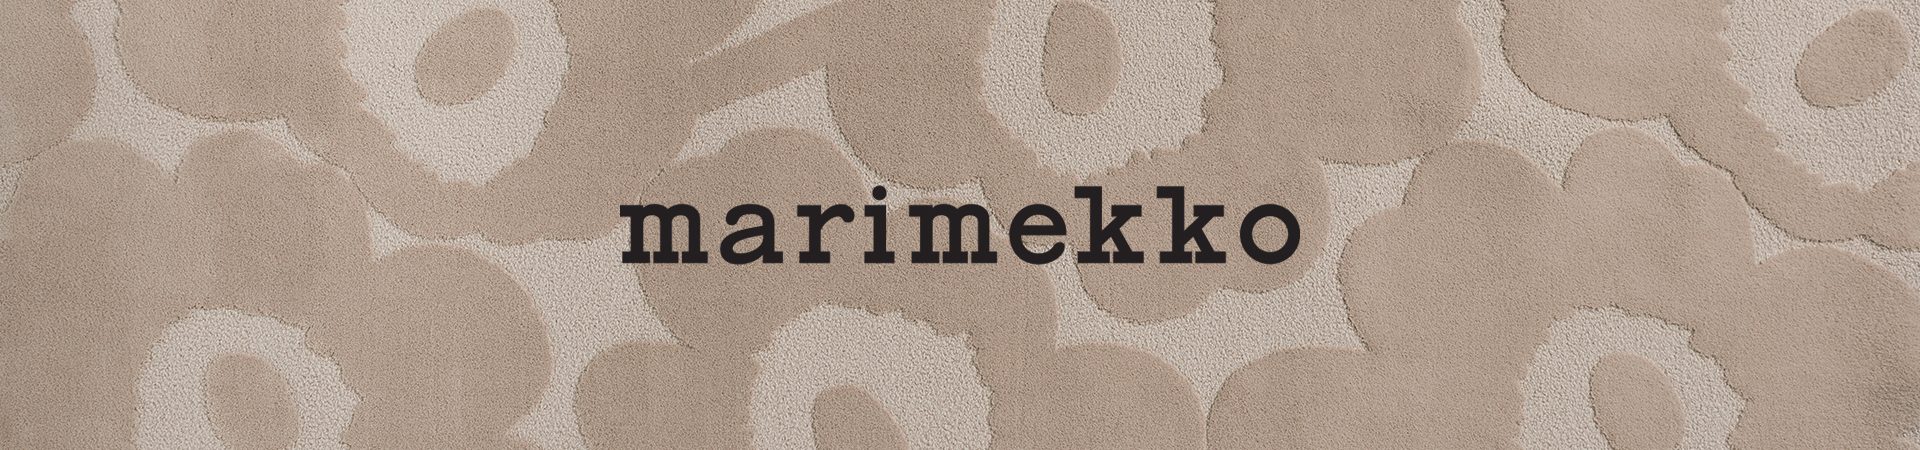 Marimekko-banner